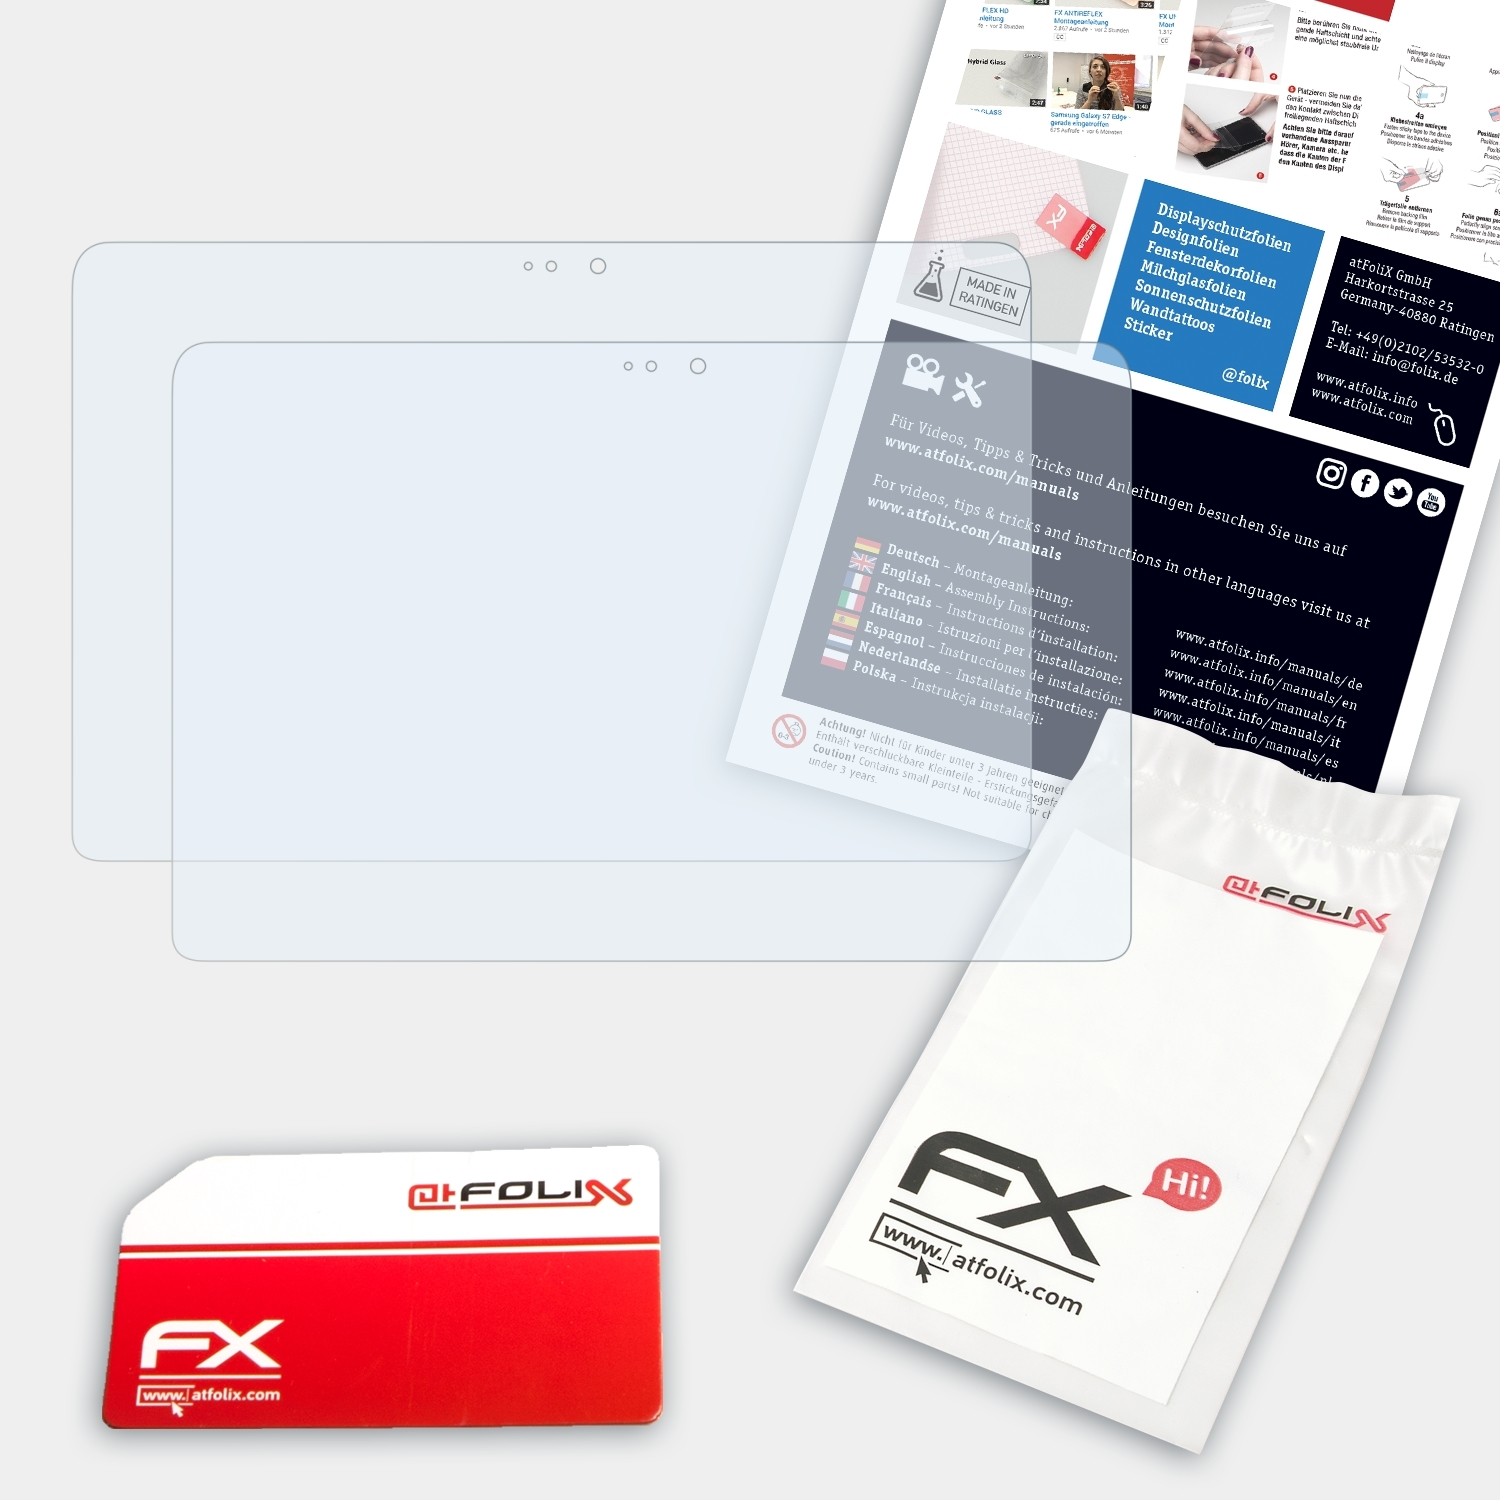 Displayschutz(für ATFOLIX ZenBook Flip (UX360UA)) Asus 2x FX-Clear